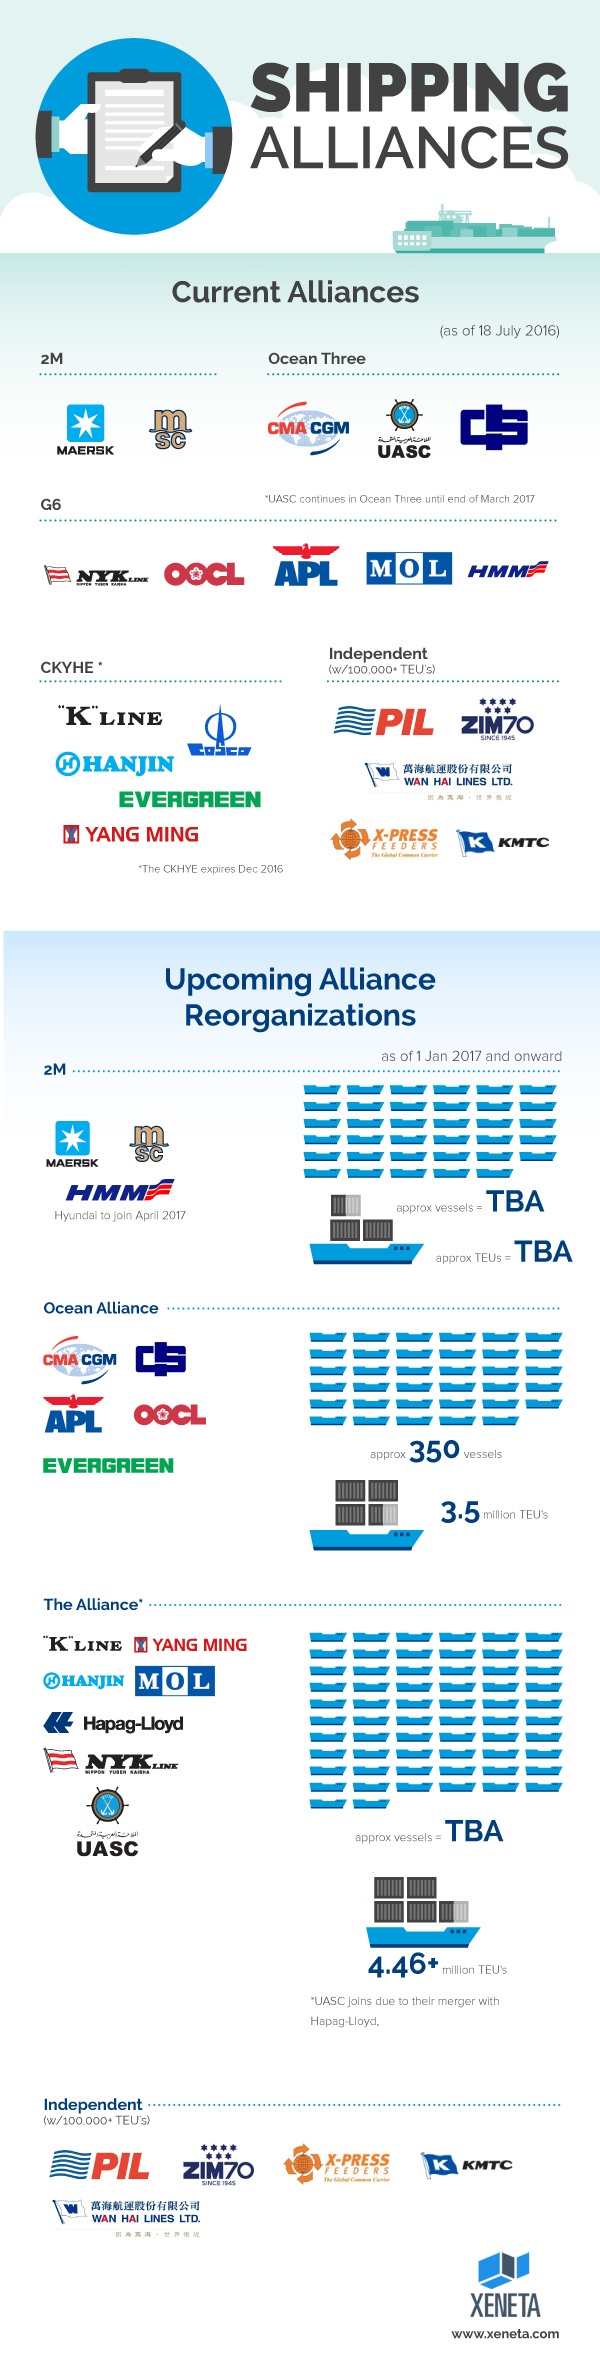 World shipping alliances, infographic